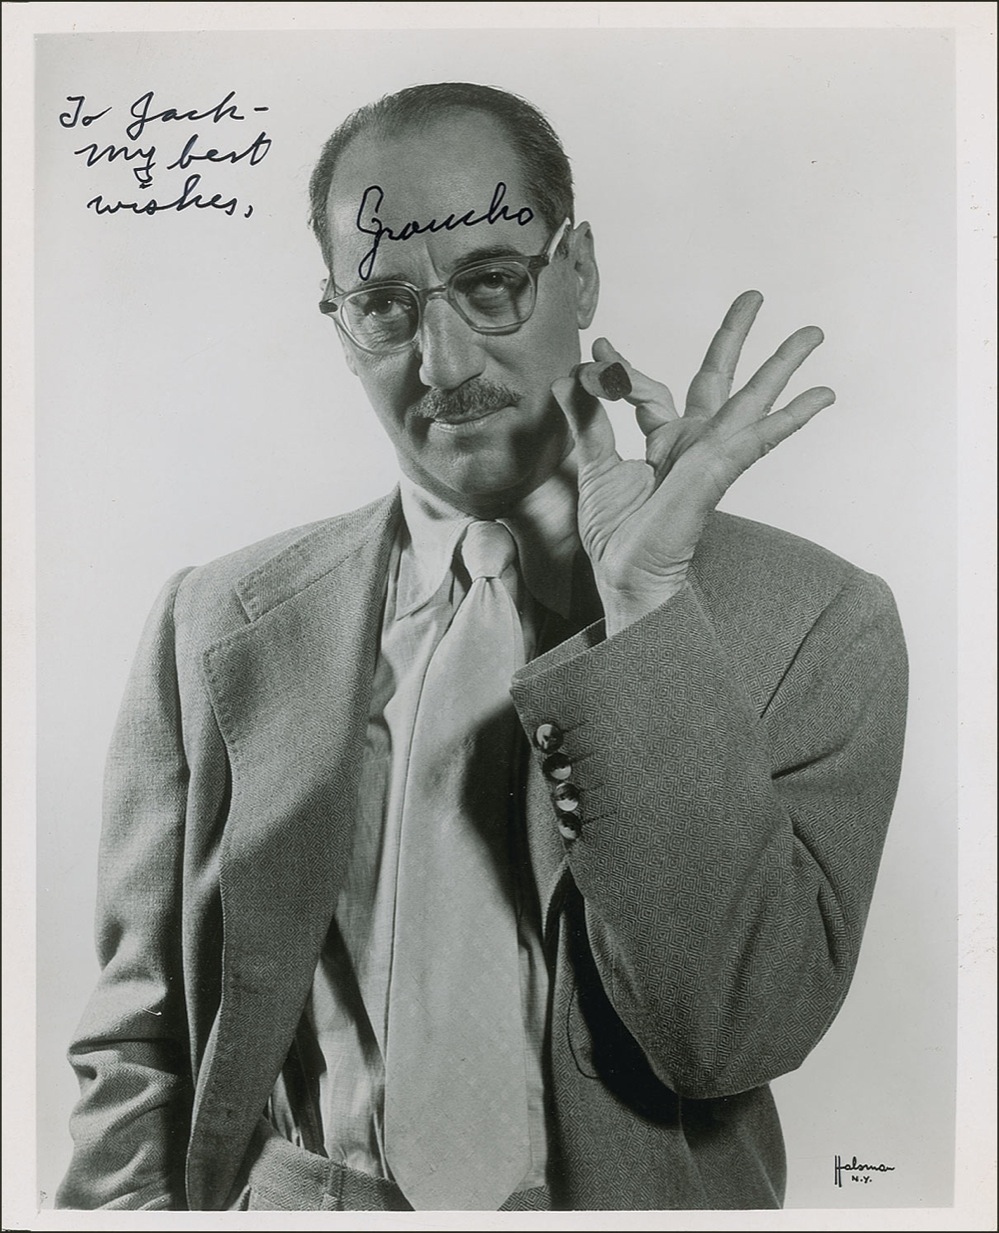 Lot #1197 Groucho Marx